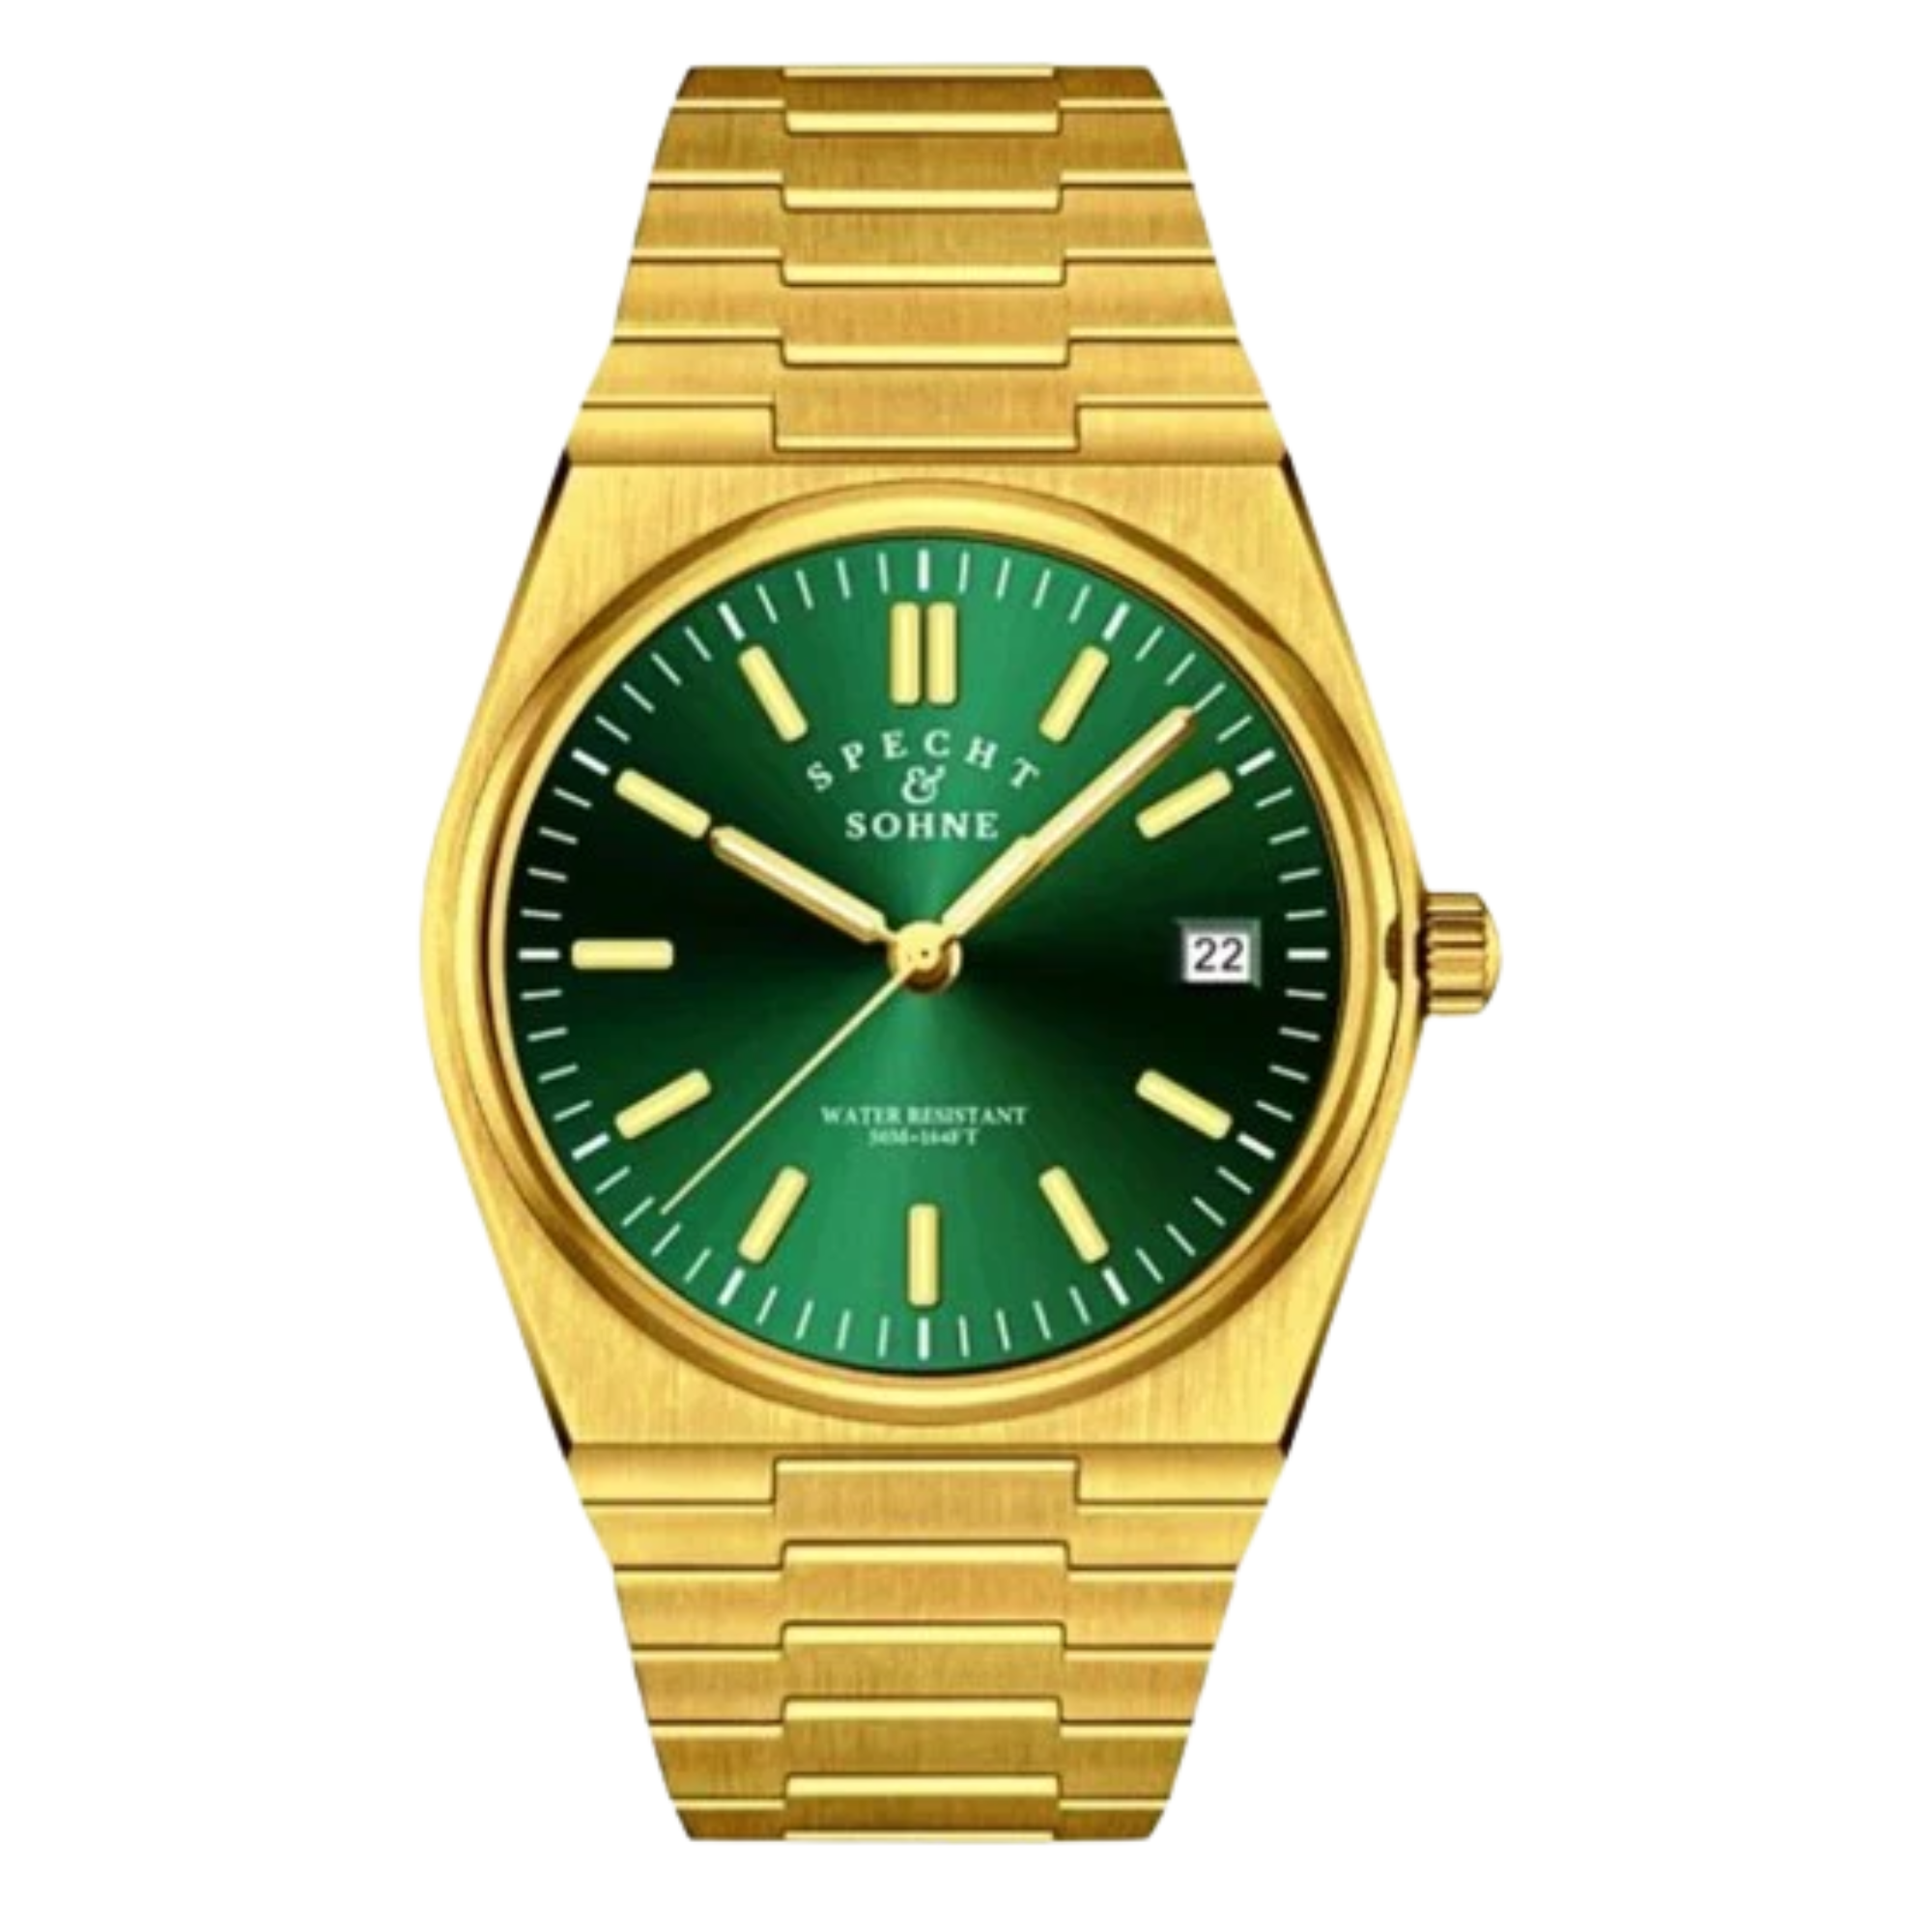 Specht&Sohne 37 Mm Mens Luxury Watch With Japanese Quartz Movement - Quartz Green Gold Edition